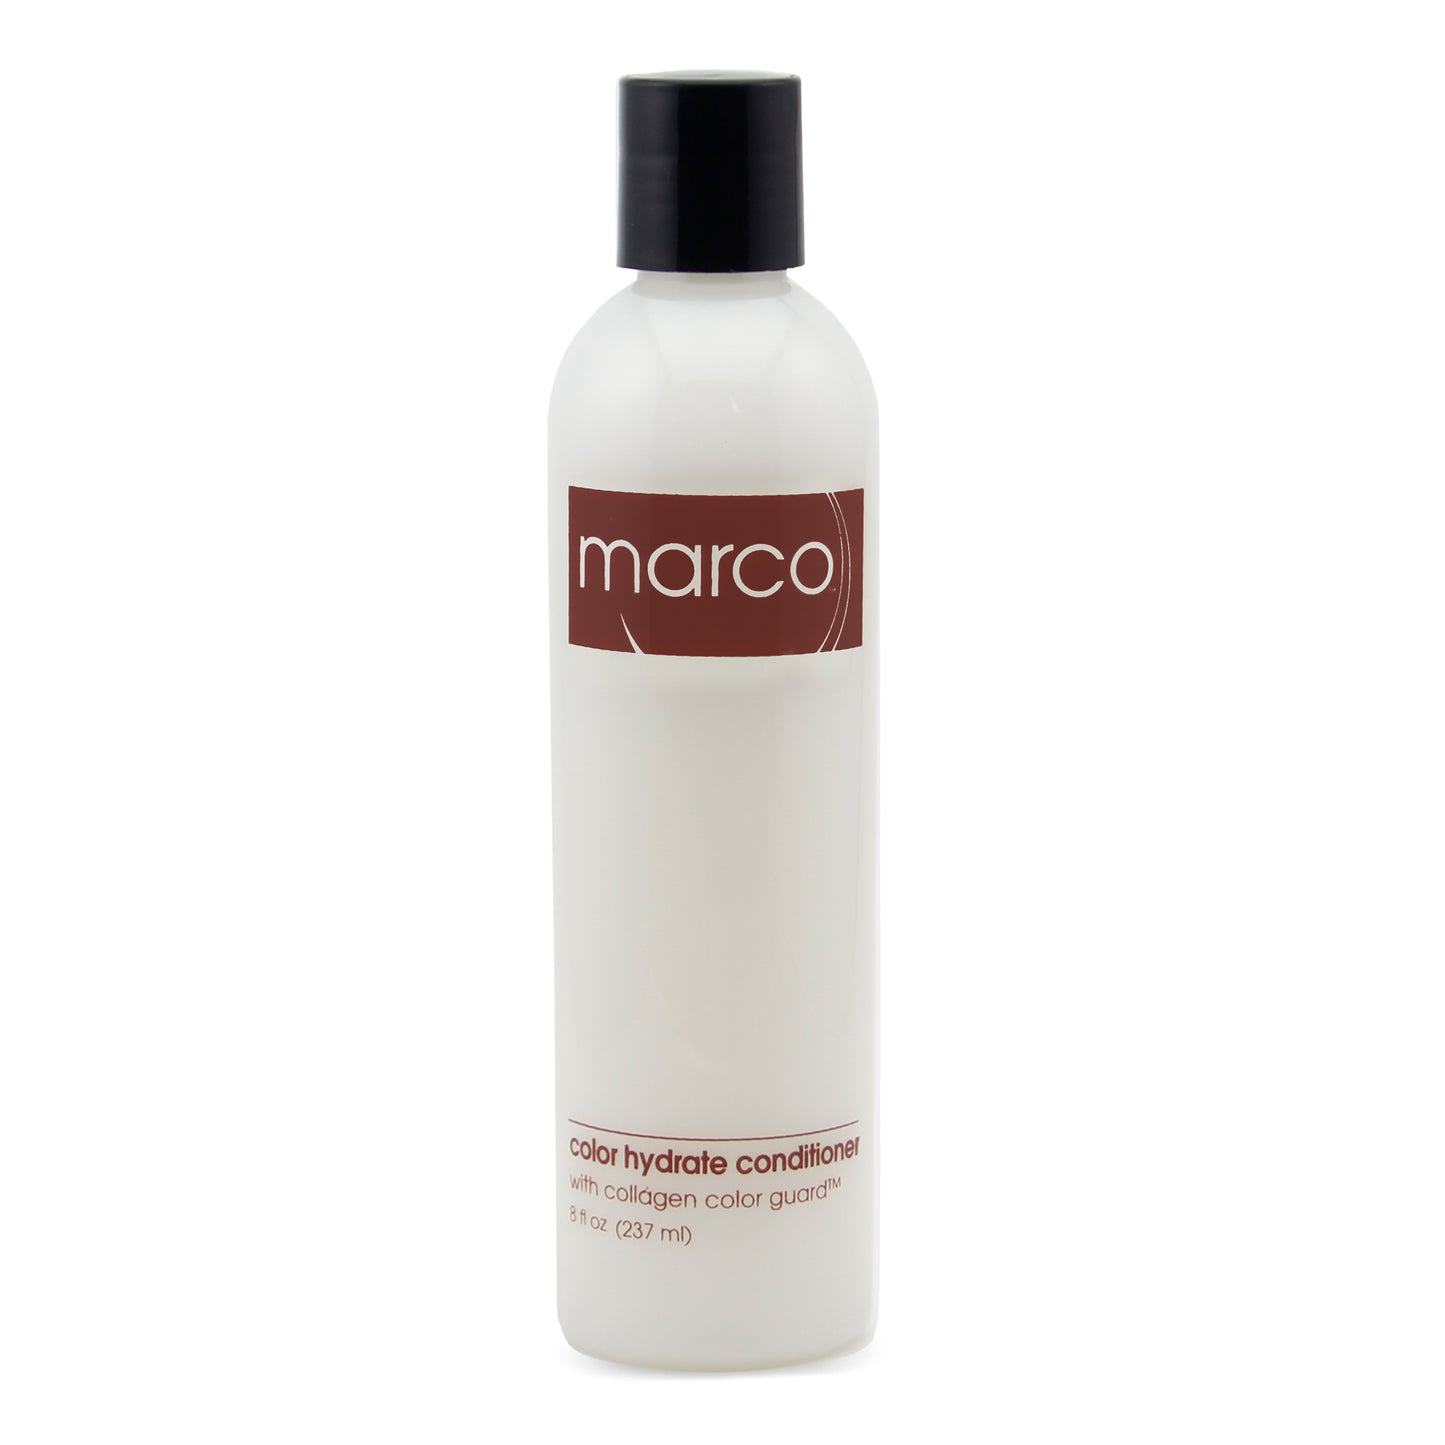 Marco Signature Stylist Brand Ambassador Starter Kit